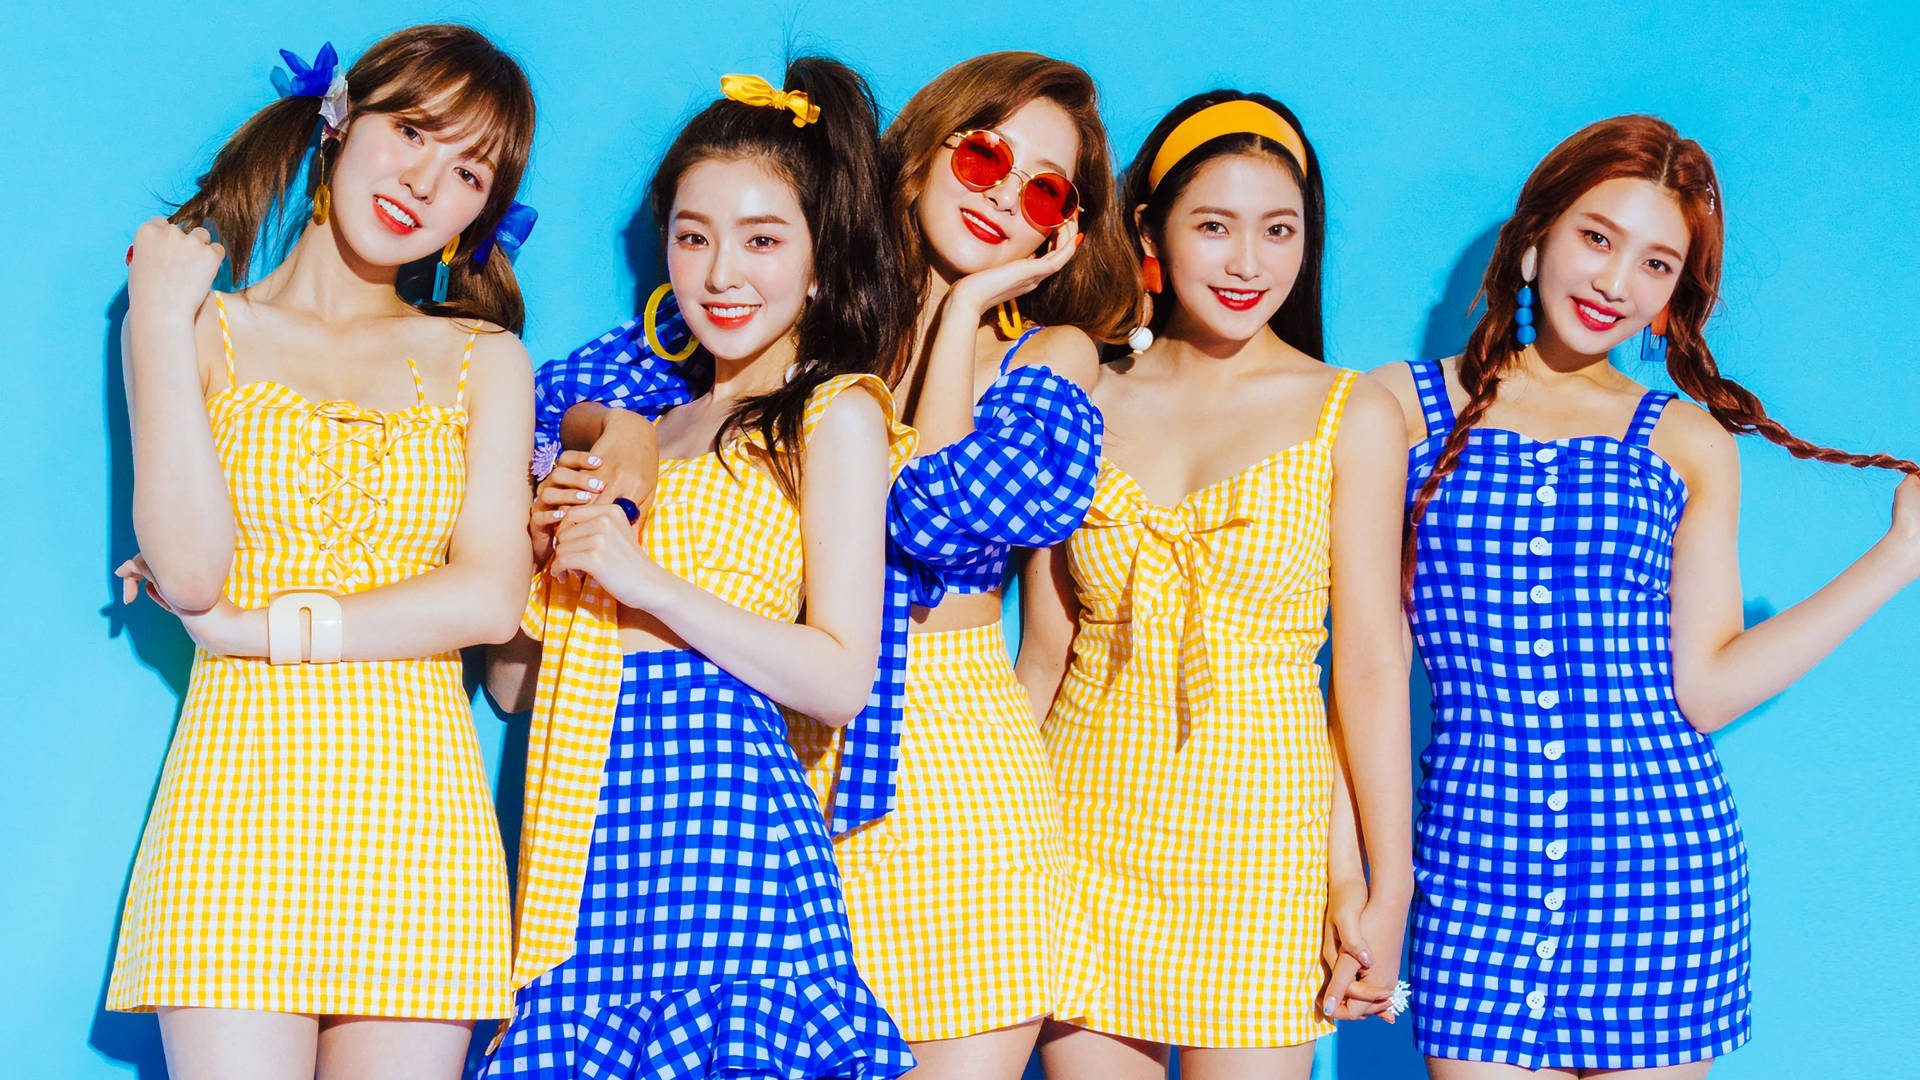 Red Velvet 3840X2160 Wallpaper and Background Image